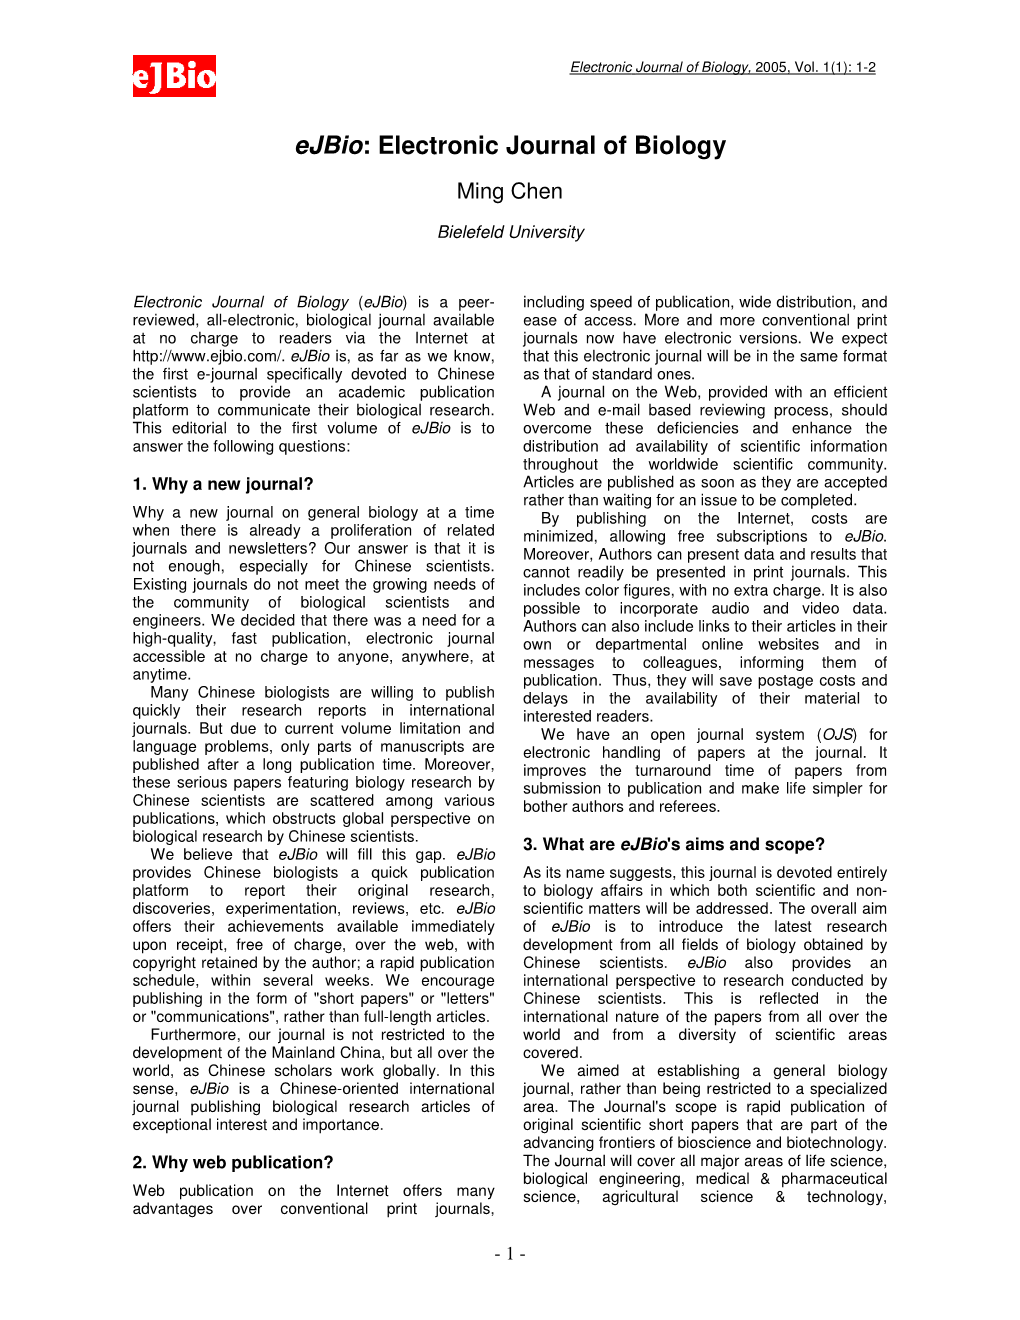 Ejbio: Electronic Journal of Biology Ming Chen